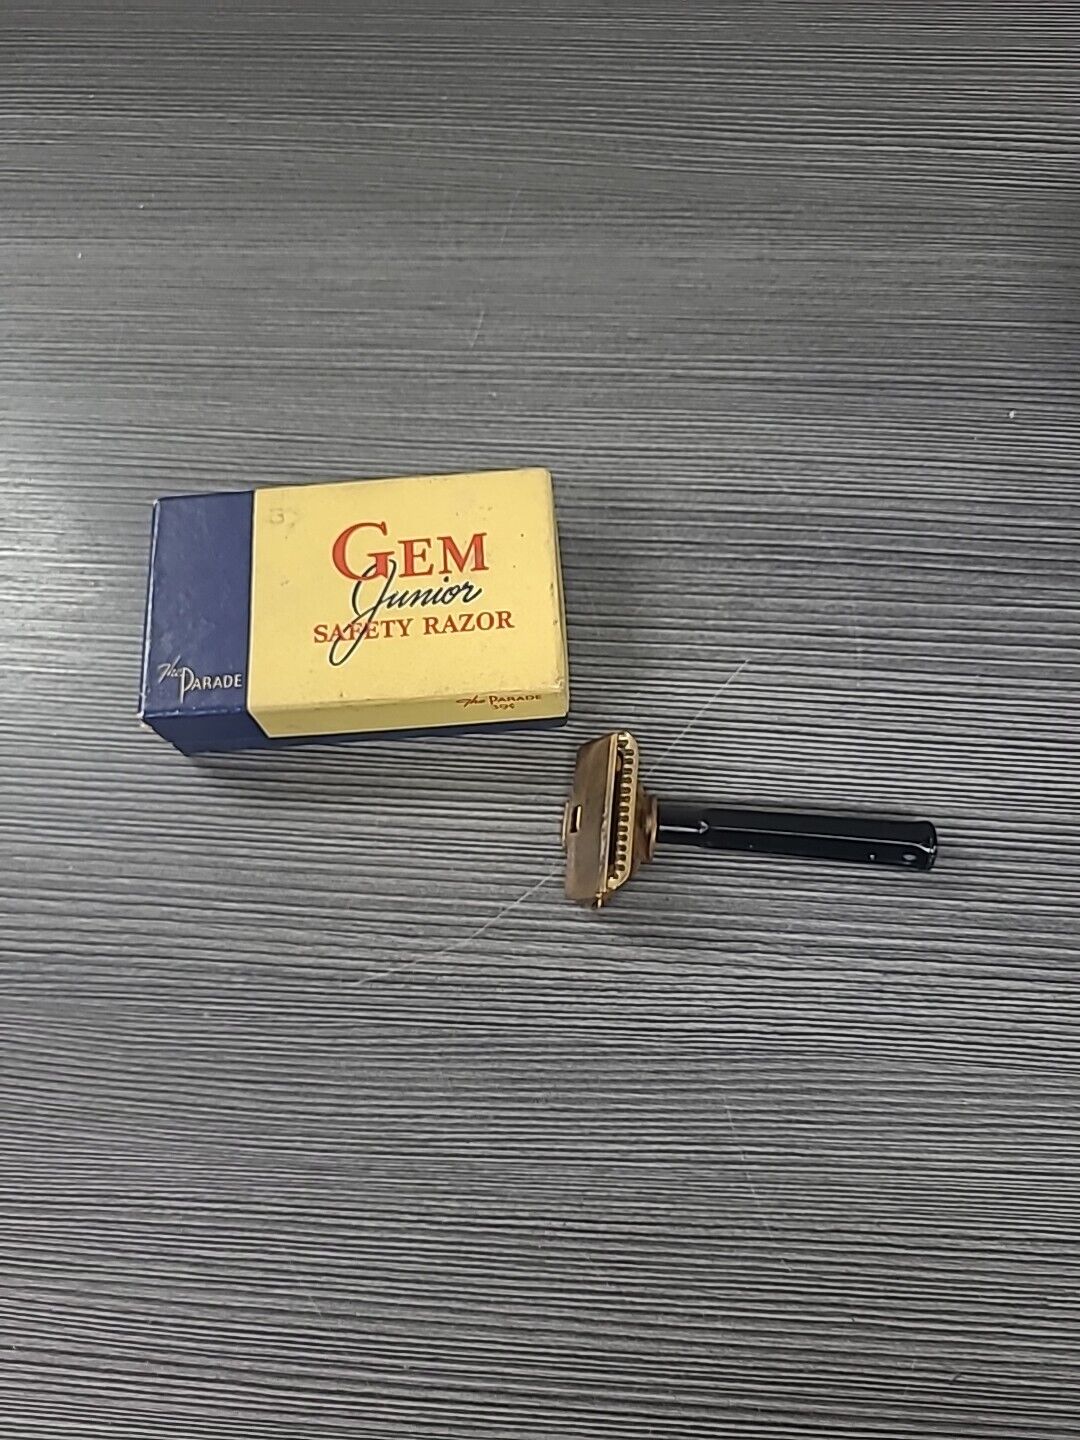 Vintage NOS Gem Junior Safety Razor in Original Box - Gold Plated